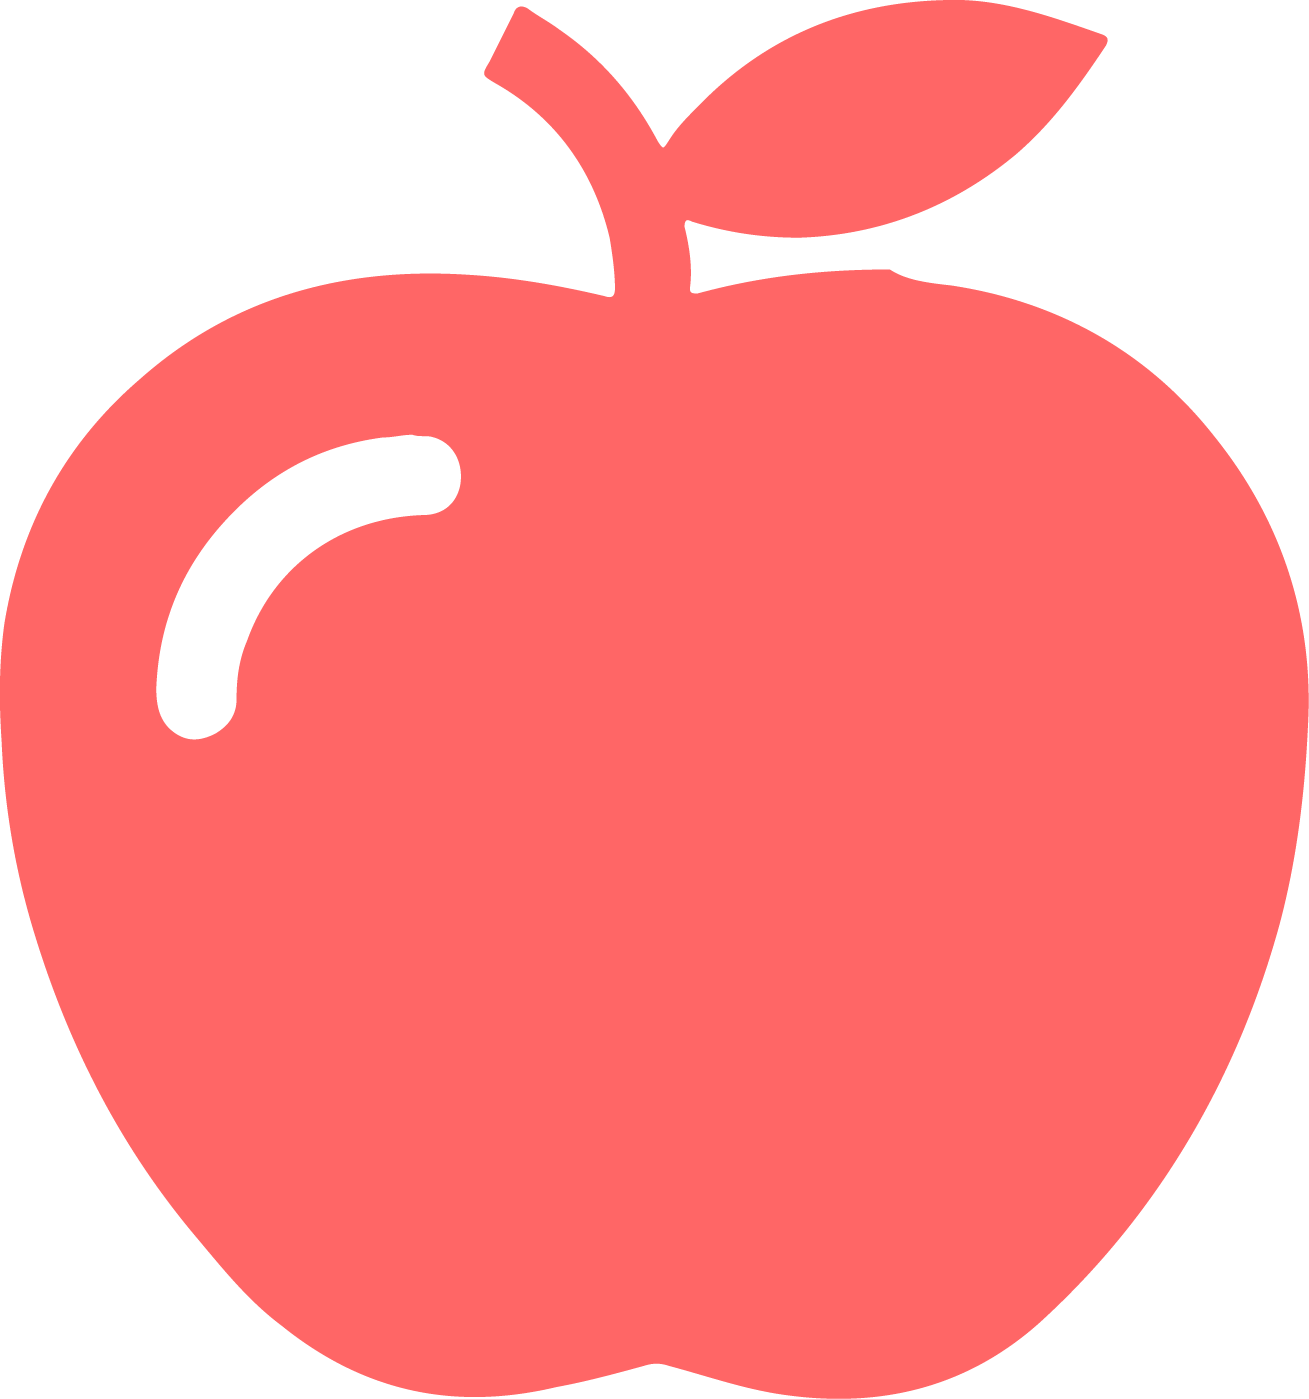 Red Apple - Mcintosh (1309x1399)